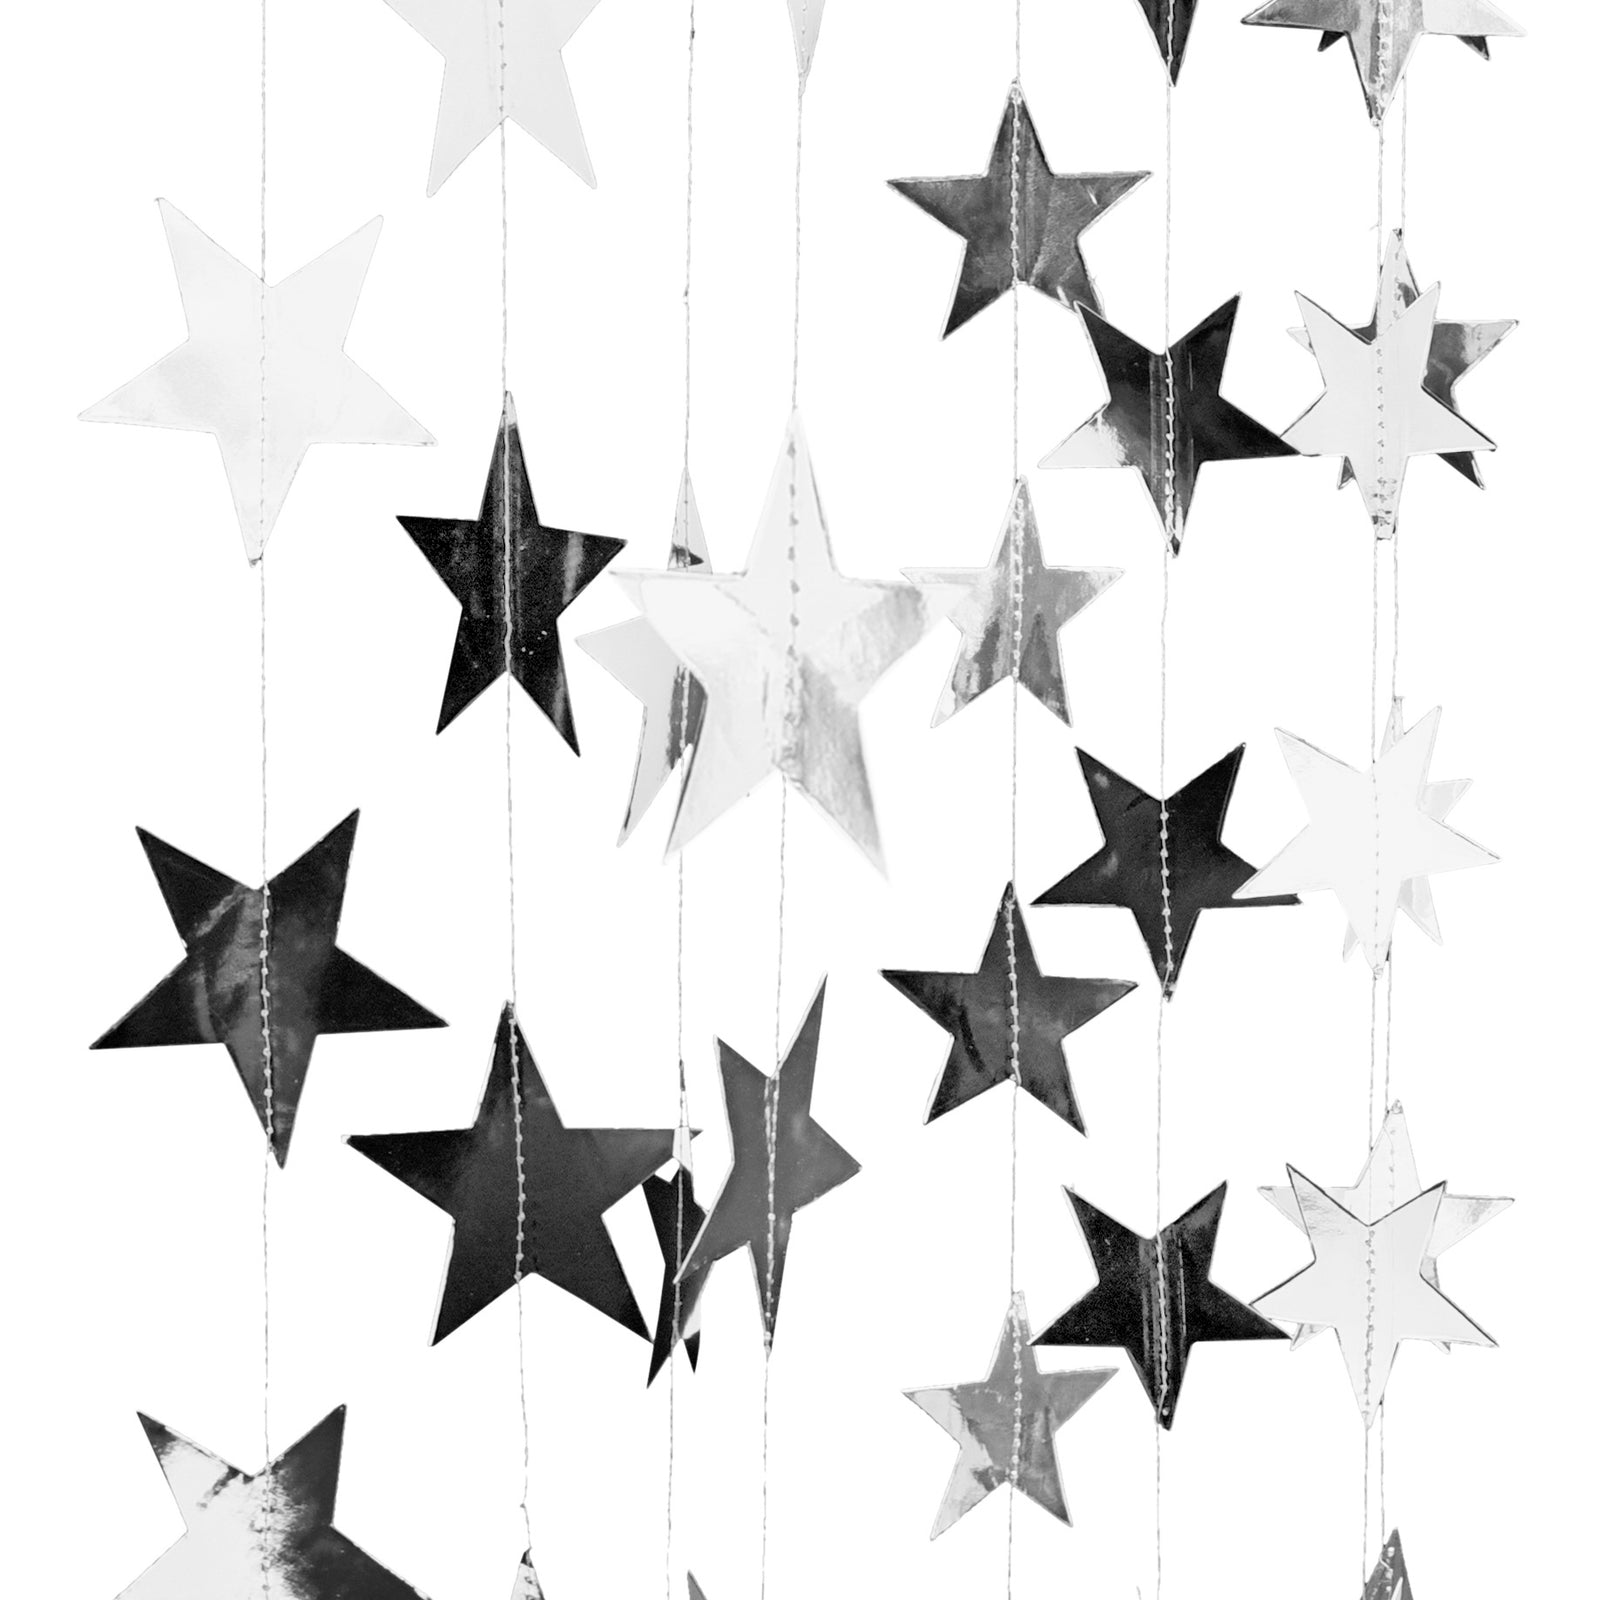 FiveSeasonStuff Paperboard Star Garlands, Banner, Decorations, Hangings for Christmas, Home Decor, Photo Wall Backdrop, Wedding, Birthday, Baby/Bridal Shower, Kids Bedroom